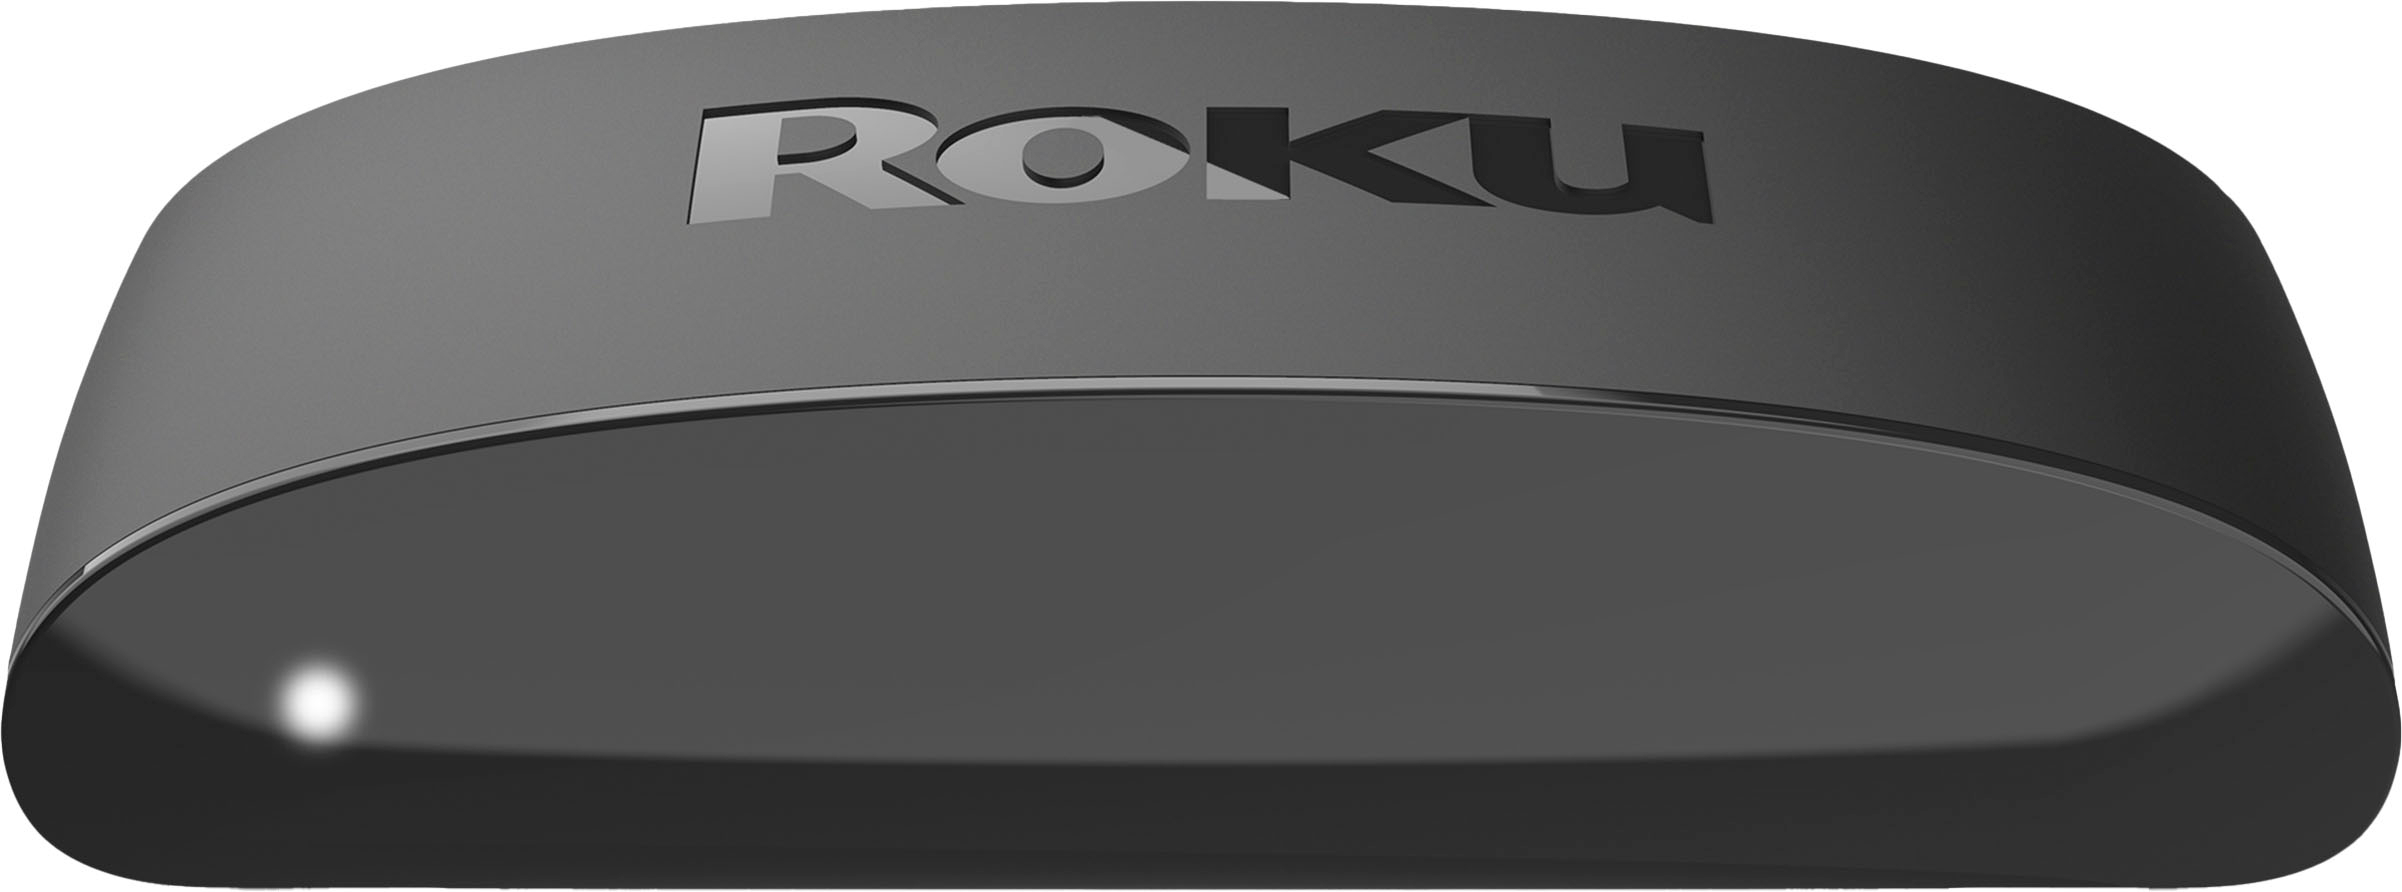 Roku Express 4K+, 4K & HDR Streaming Device